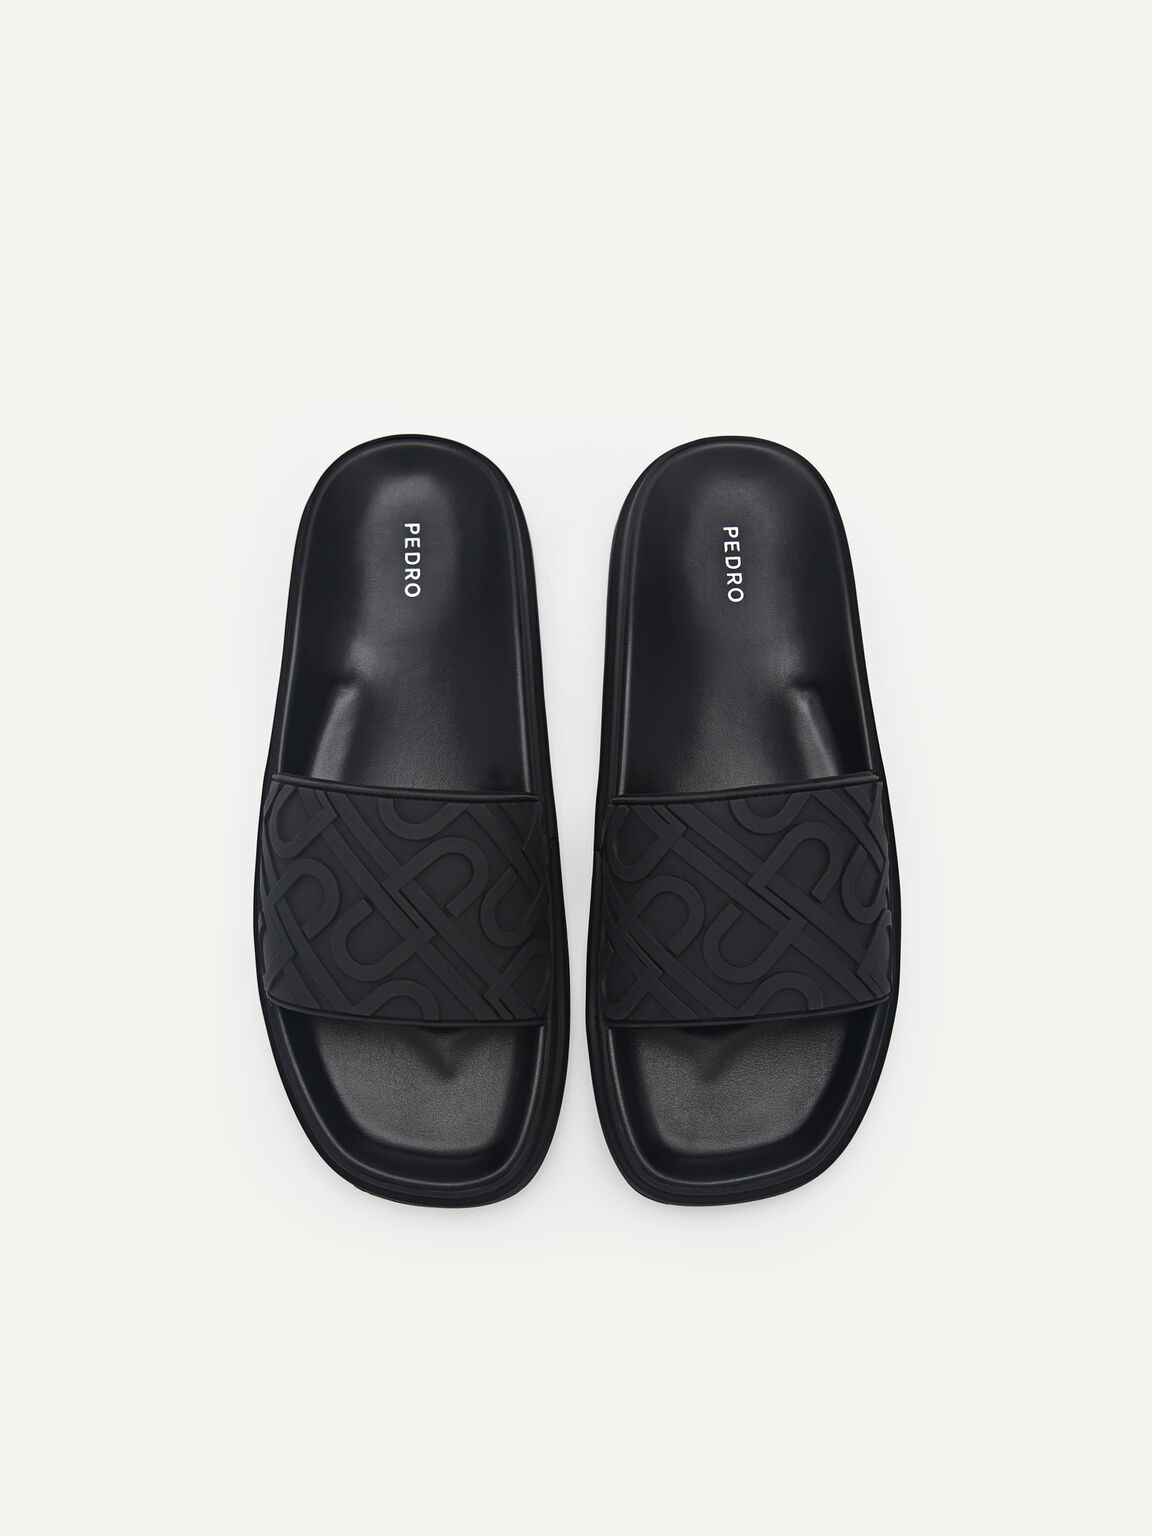 PEDRO Icon Embossed Slide Sandals, Black